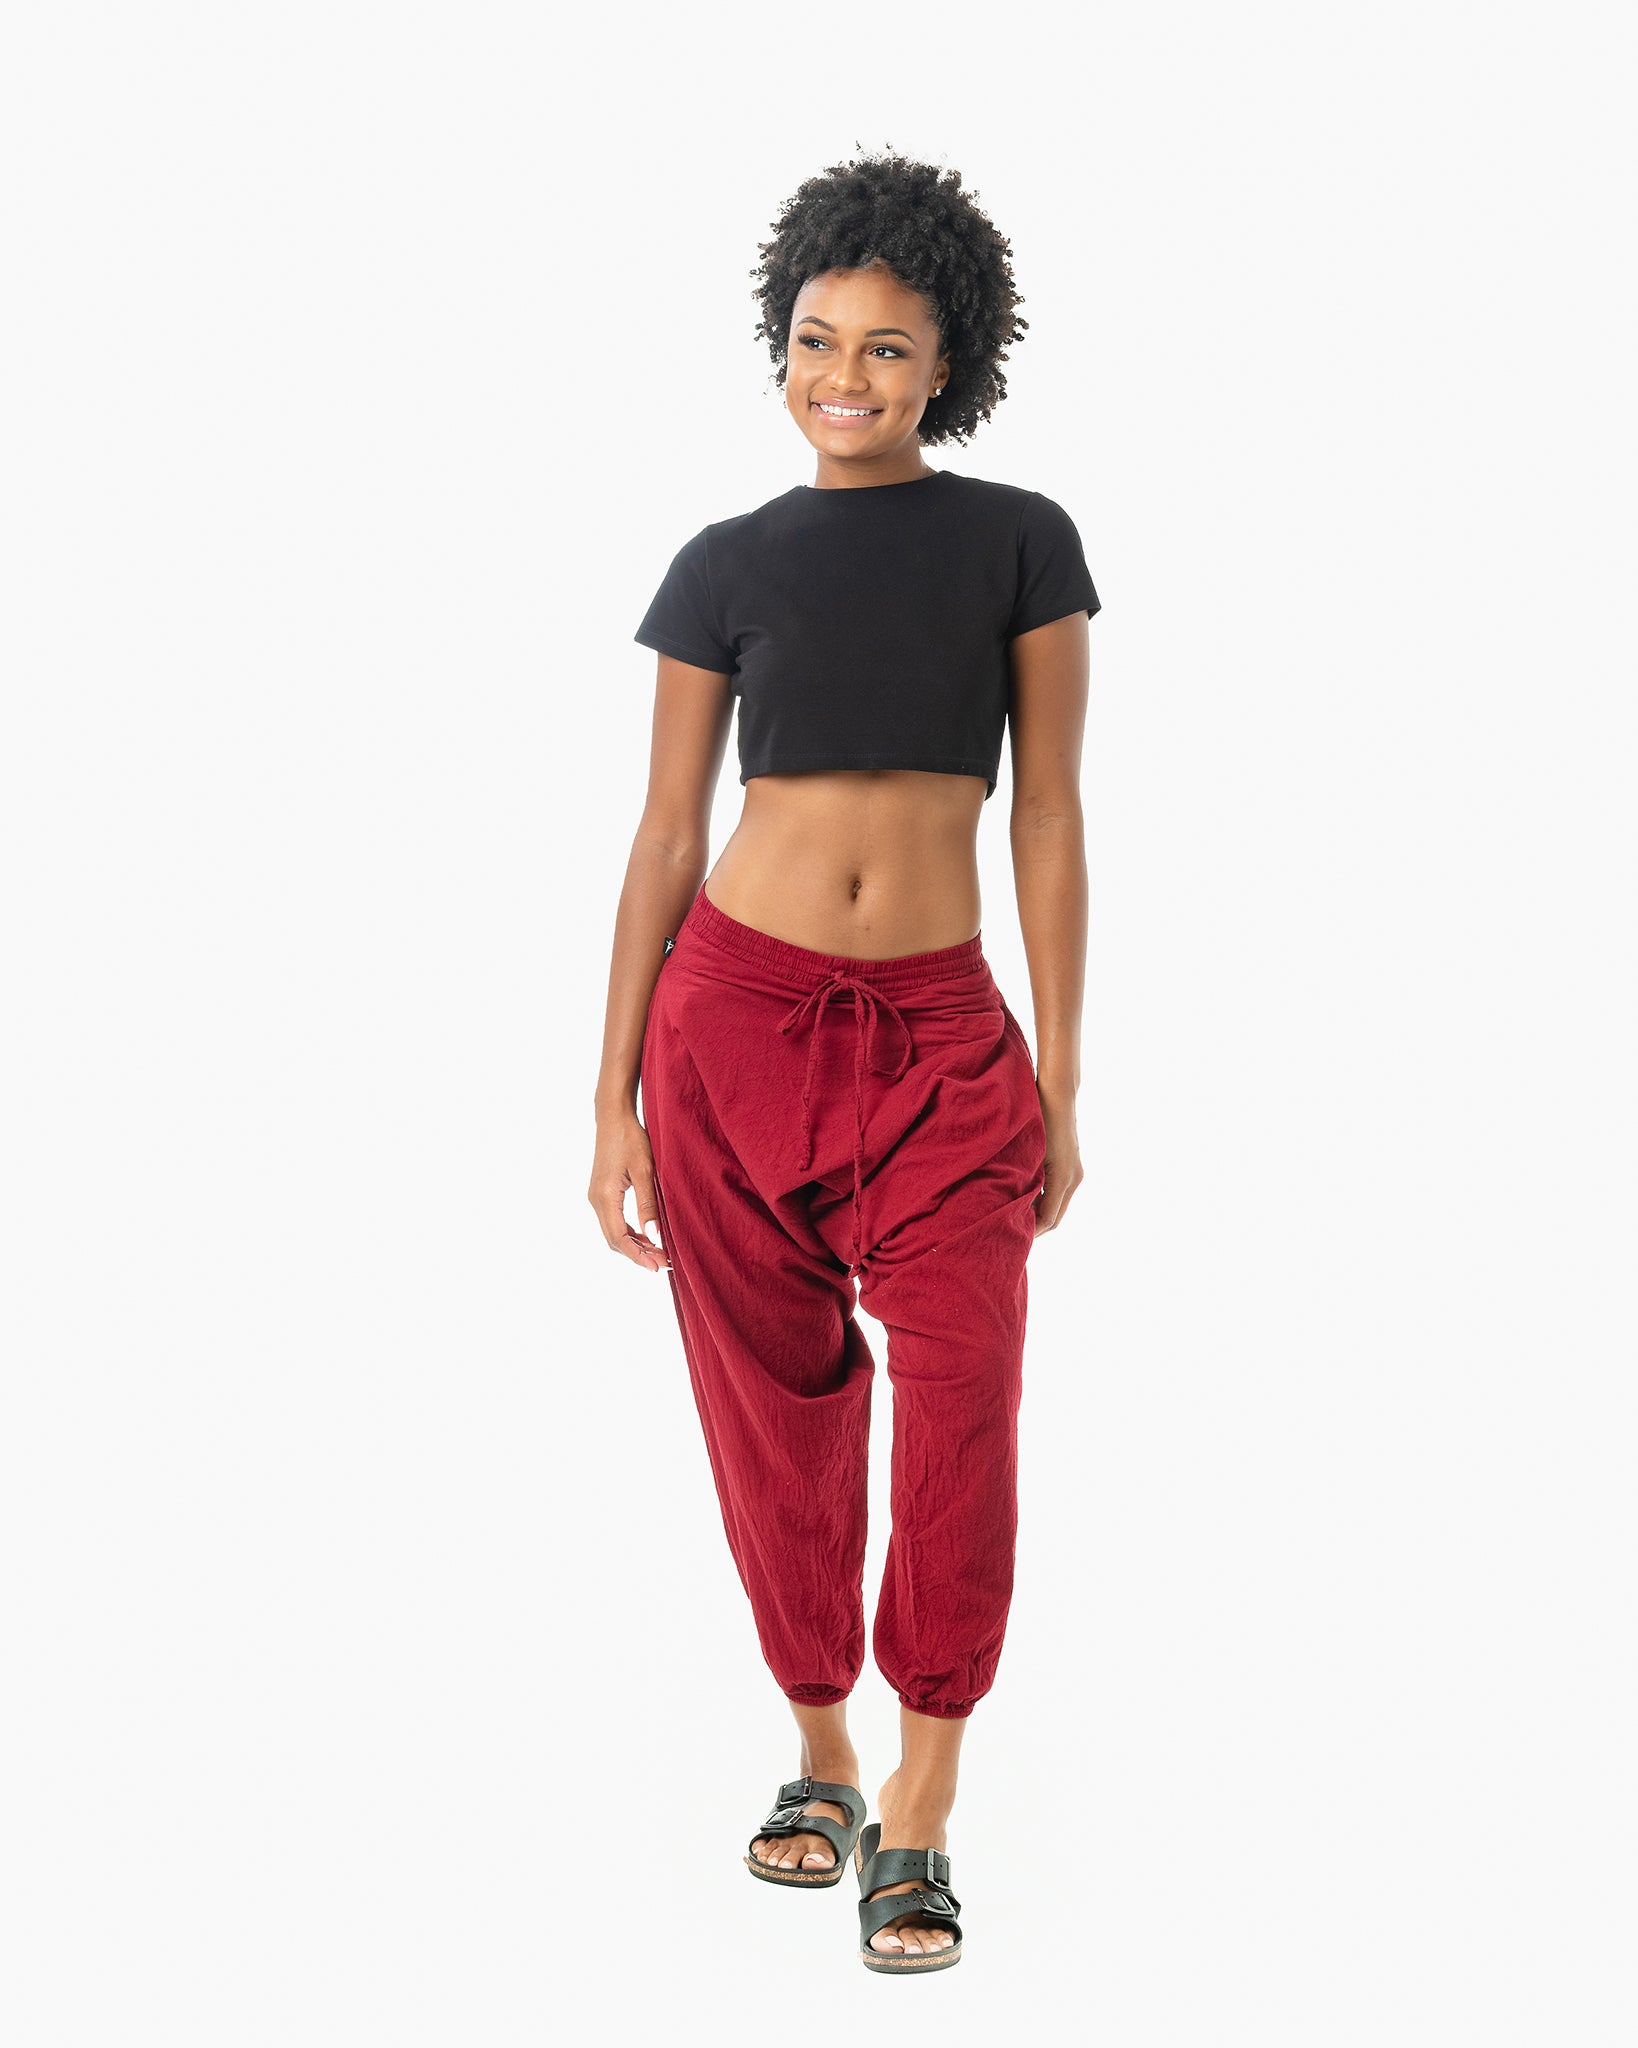 Noli Yoga Red Buddha Yoga Pants - Product Review 